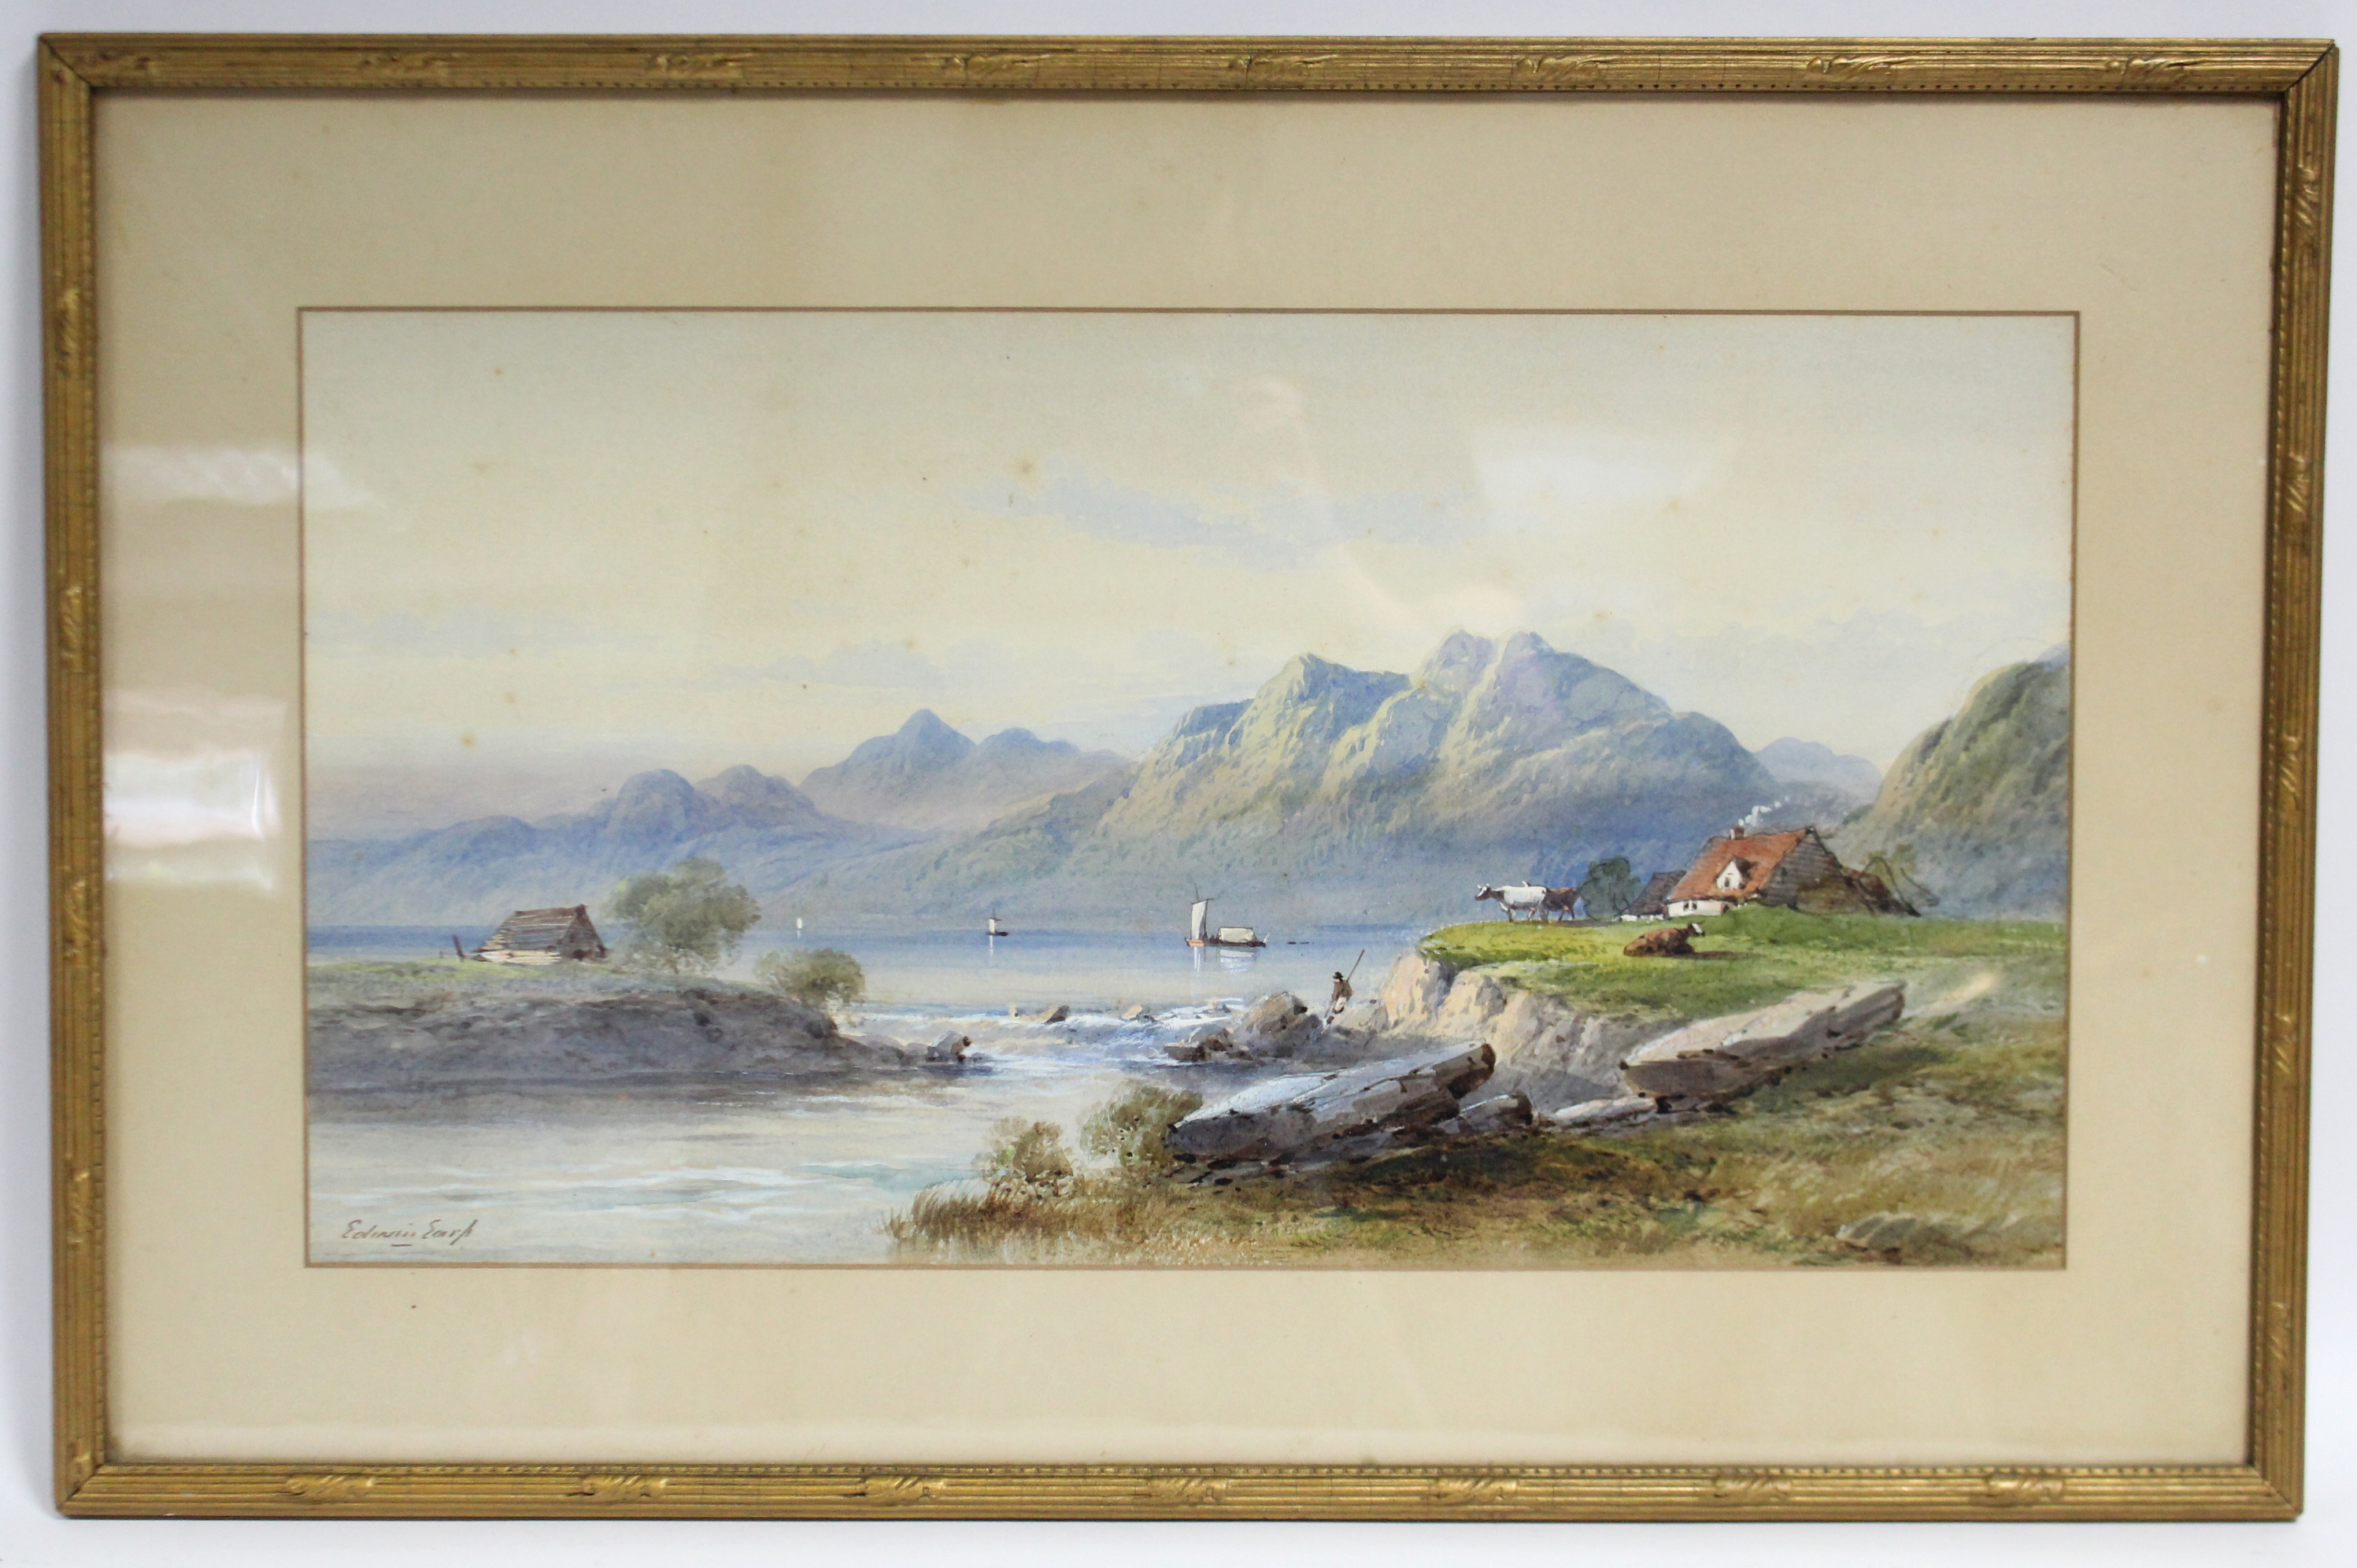 EDWIN EARP (1851-1945). A mountainous landscape with figures, cattle & buildings beside a lake.